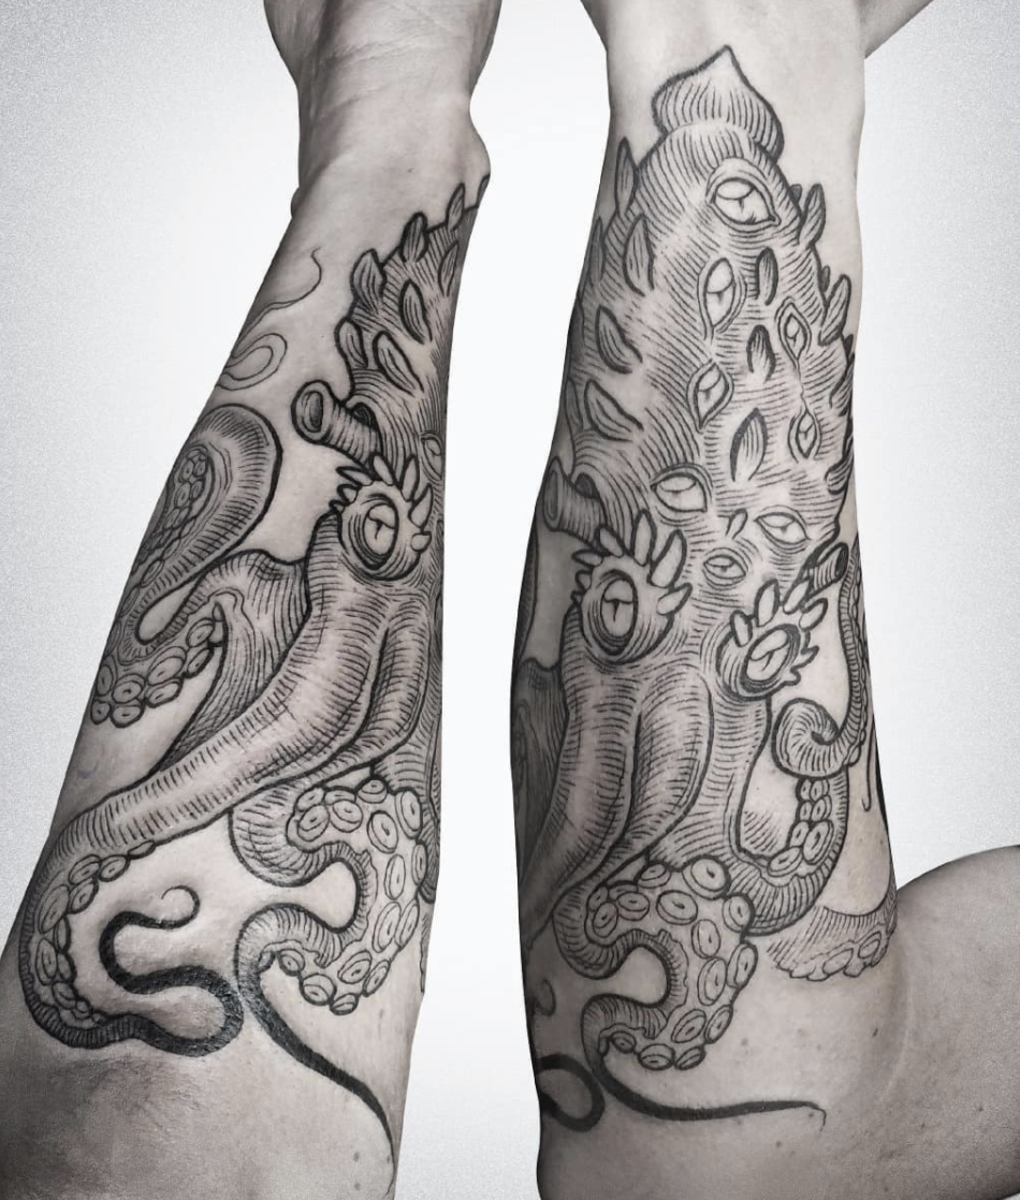 Octopus tattoo by @yustecore_tattoo at @alexoruetaestudio